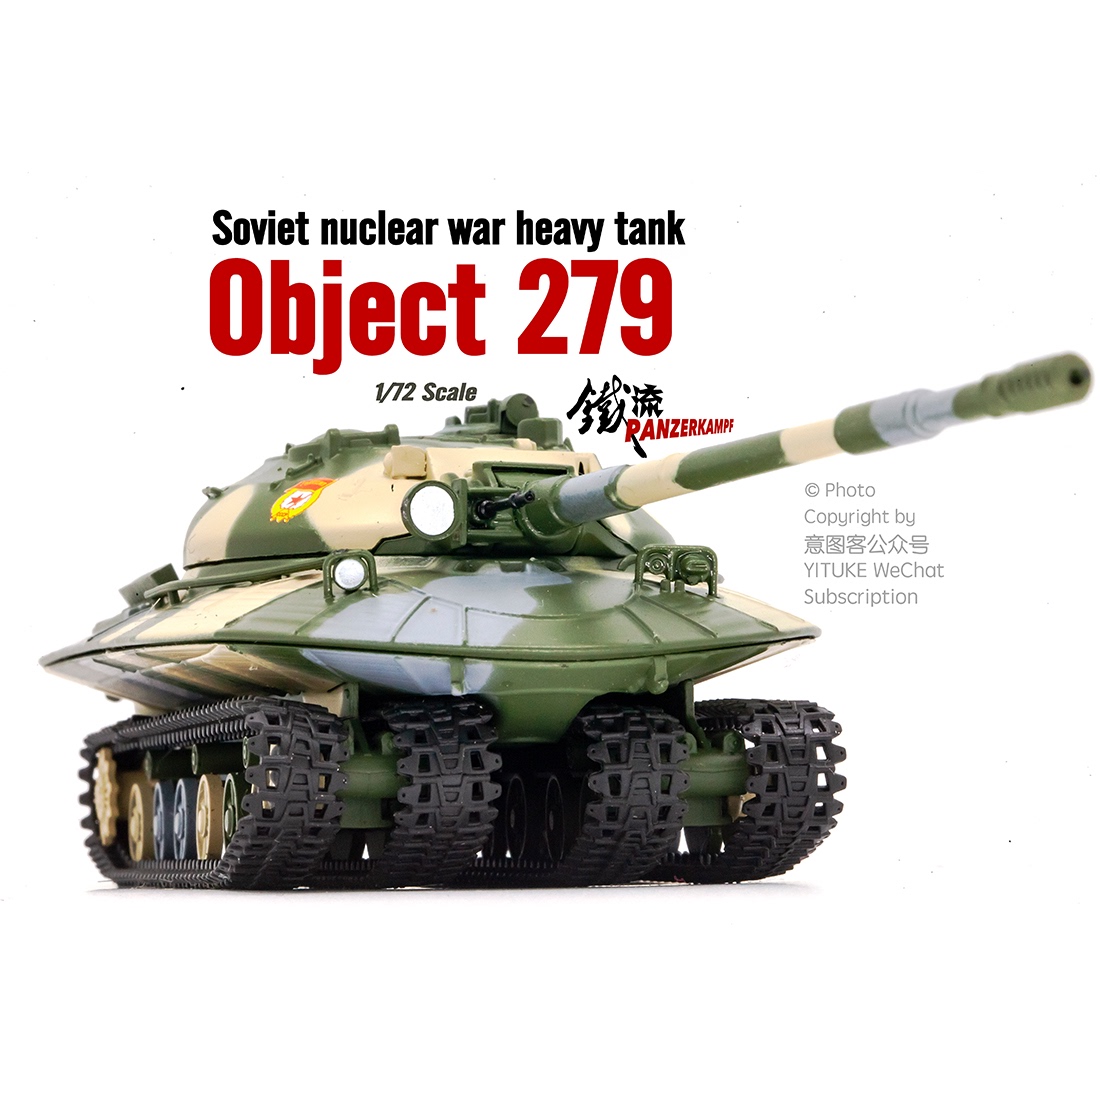 Panzerkampf冷战苏联279工程核战争重型坦克成品军事战车模e型1/